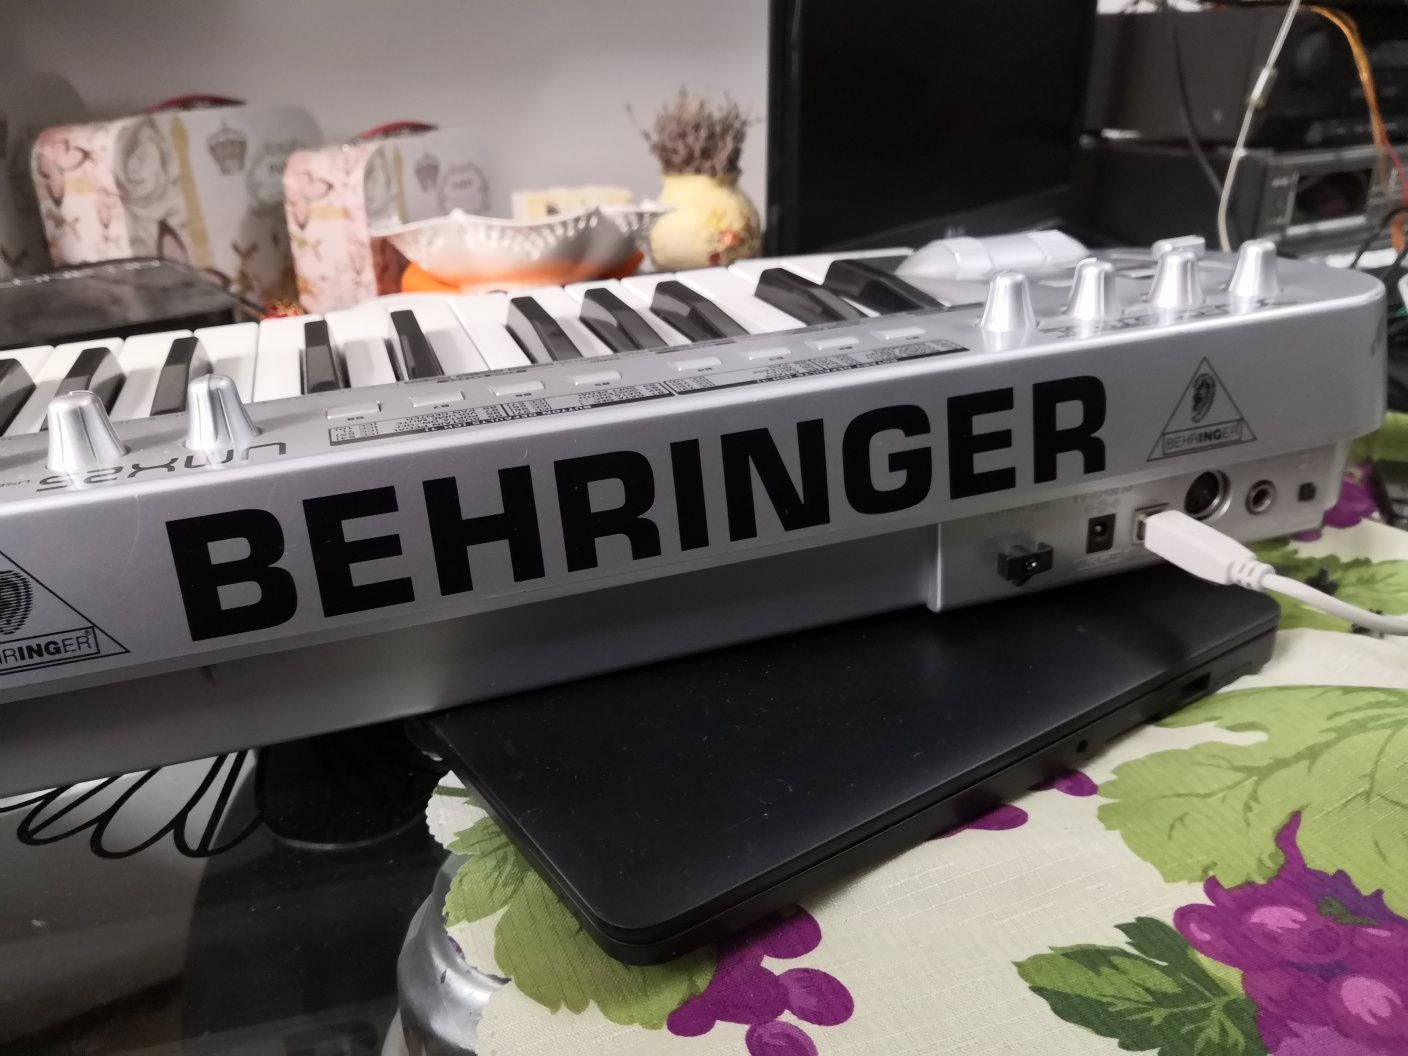 Behringher UMX25 - USB / Midi controler keyboard